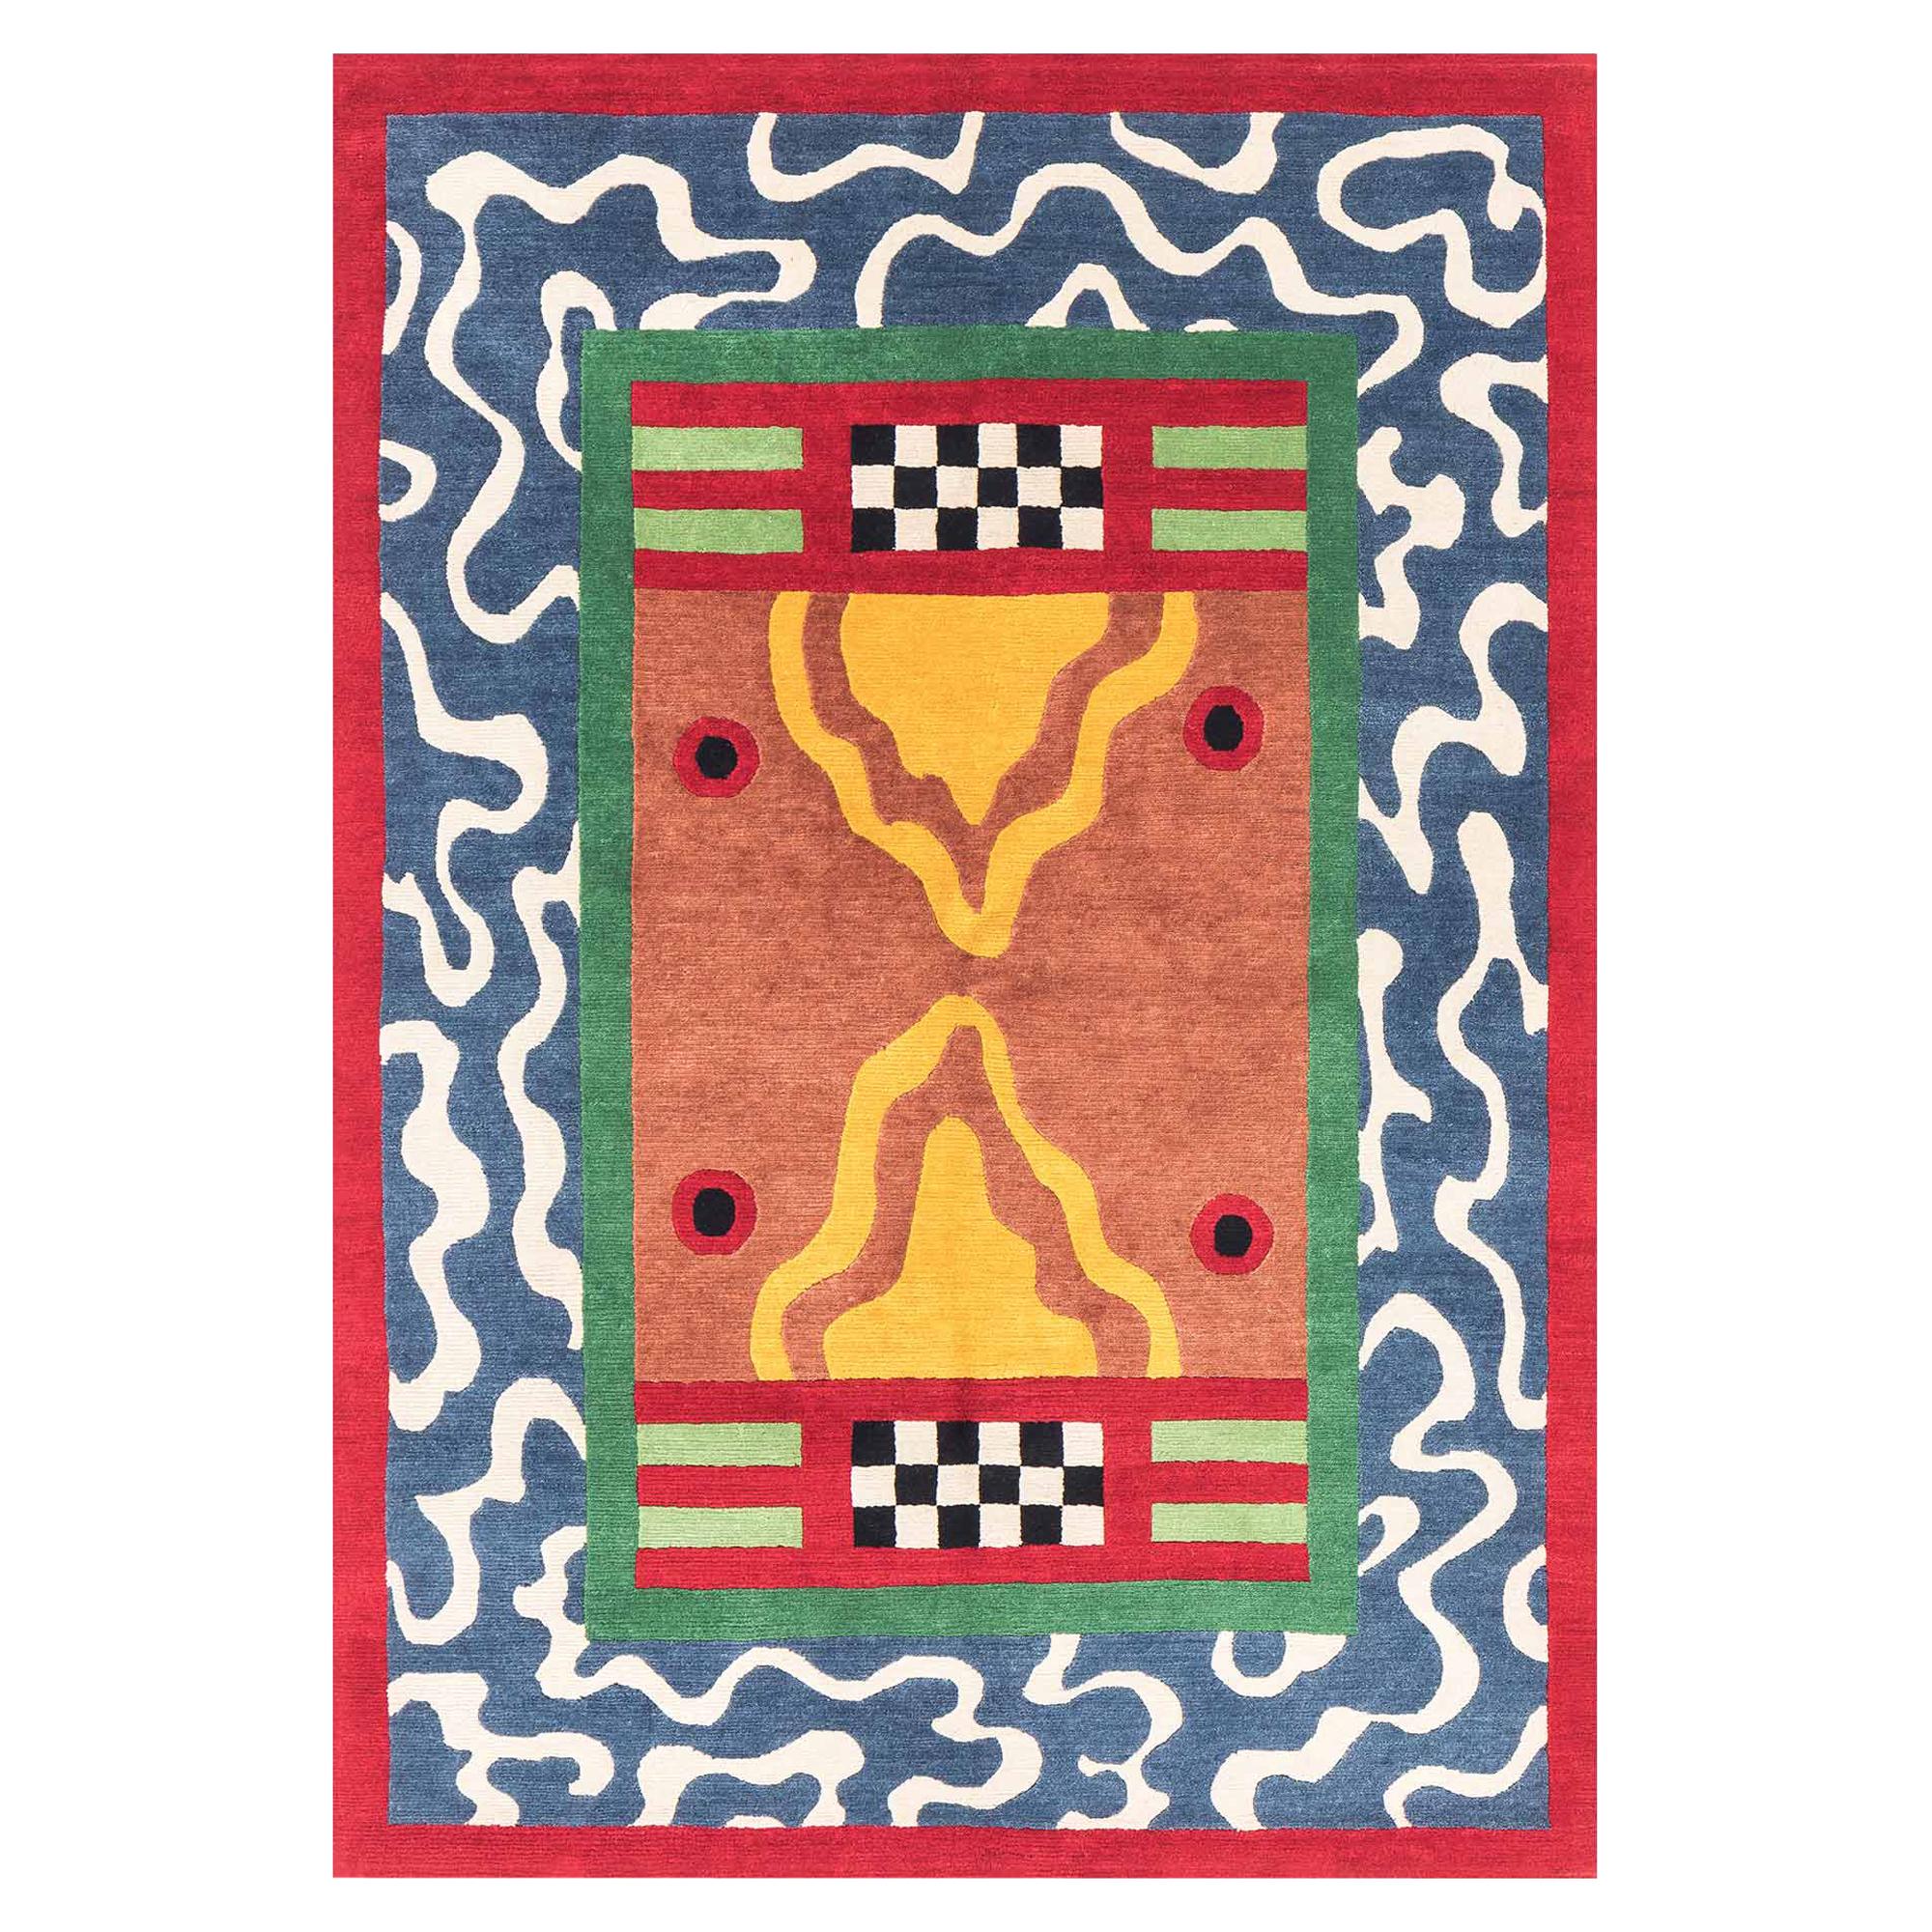 Big Birds Woollen Carpet by Nathalie du Pasquier for Post Design Collec/Memphis